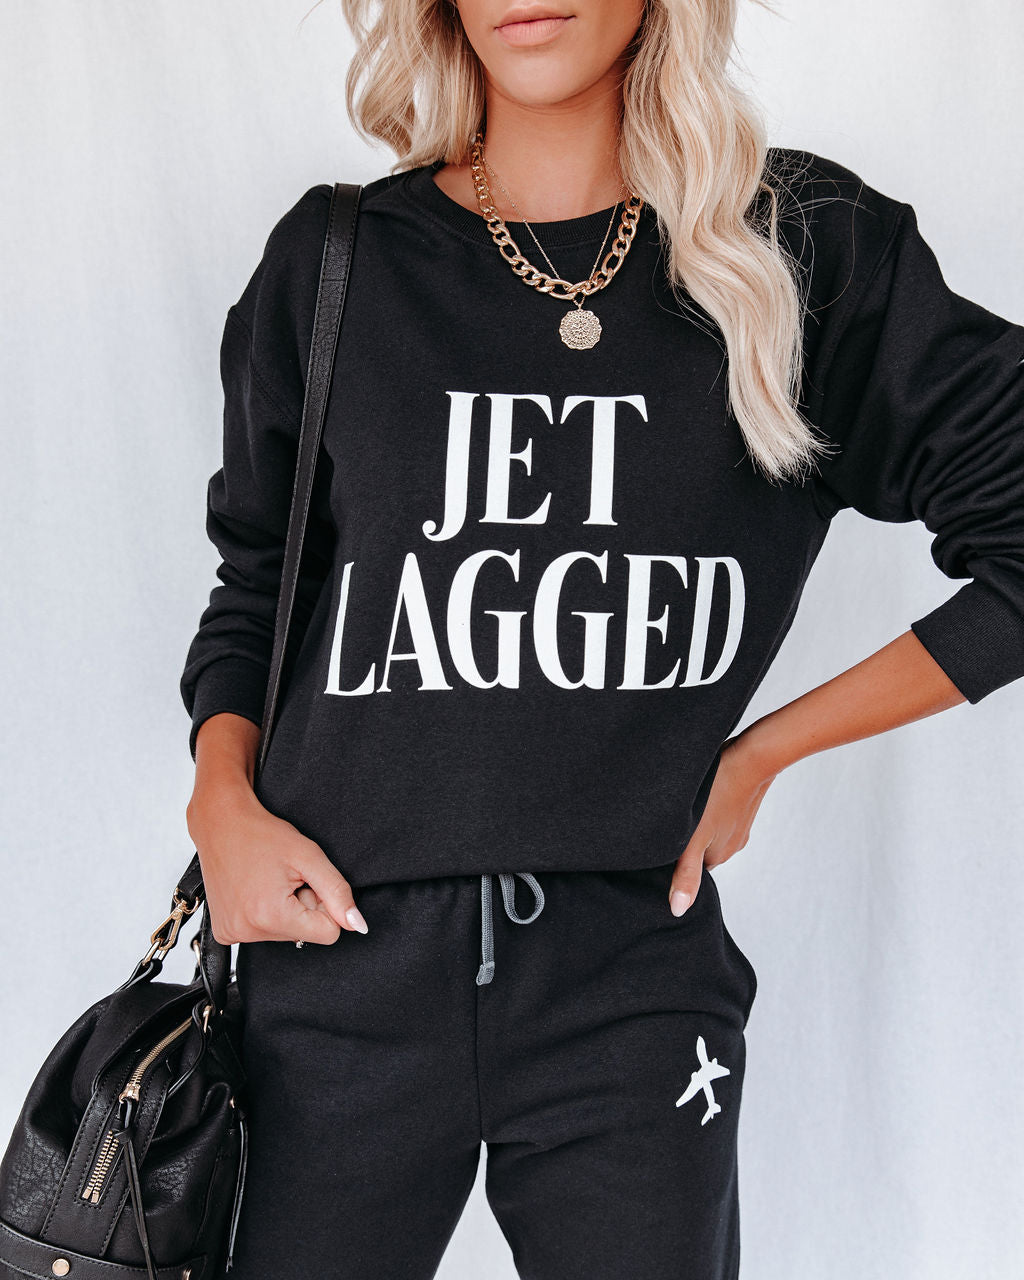 Jet Lagged Cotton Blend Sweatshirt